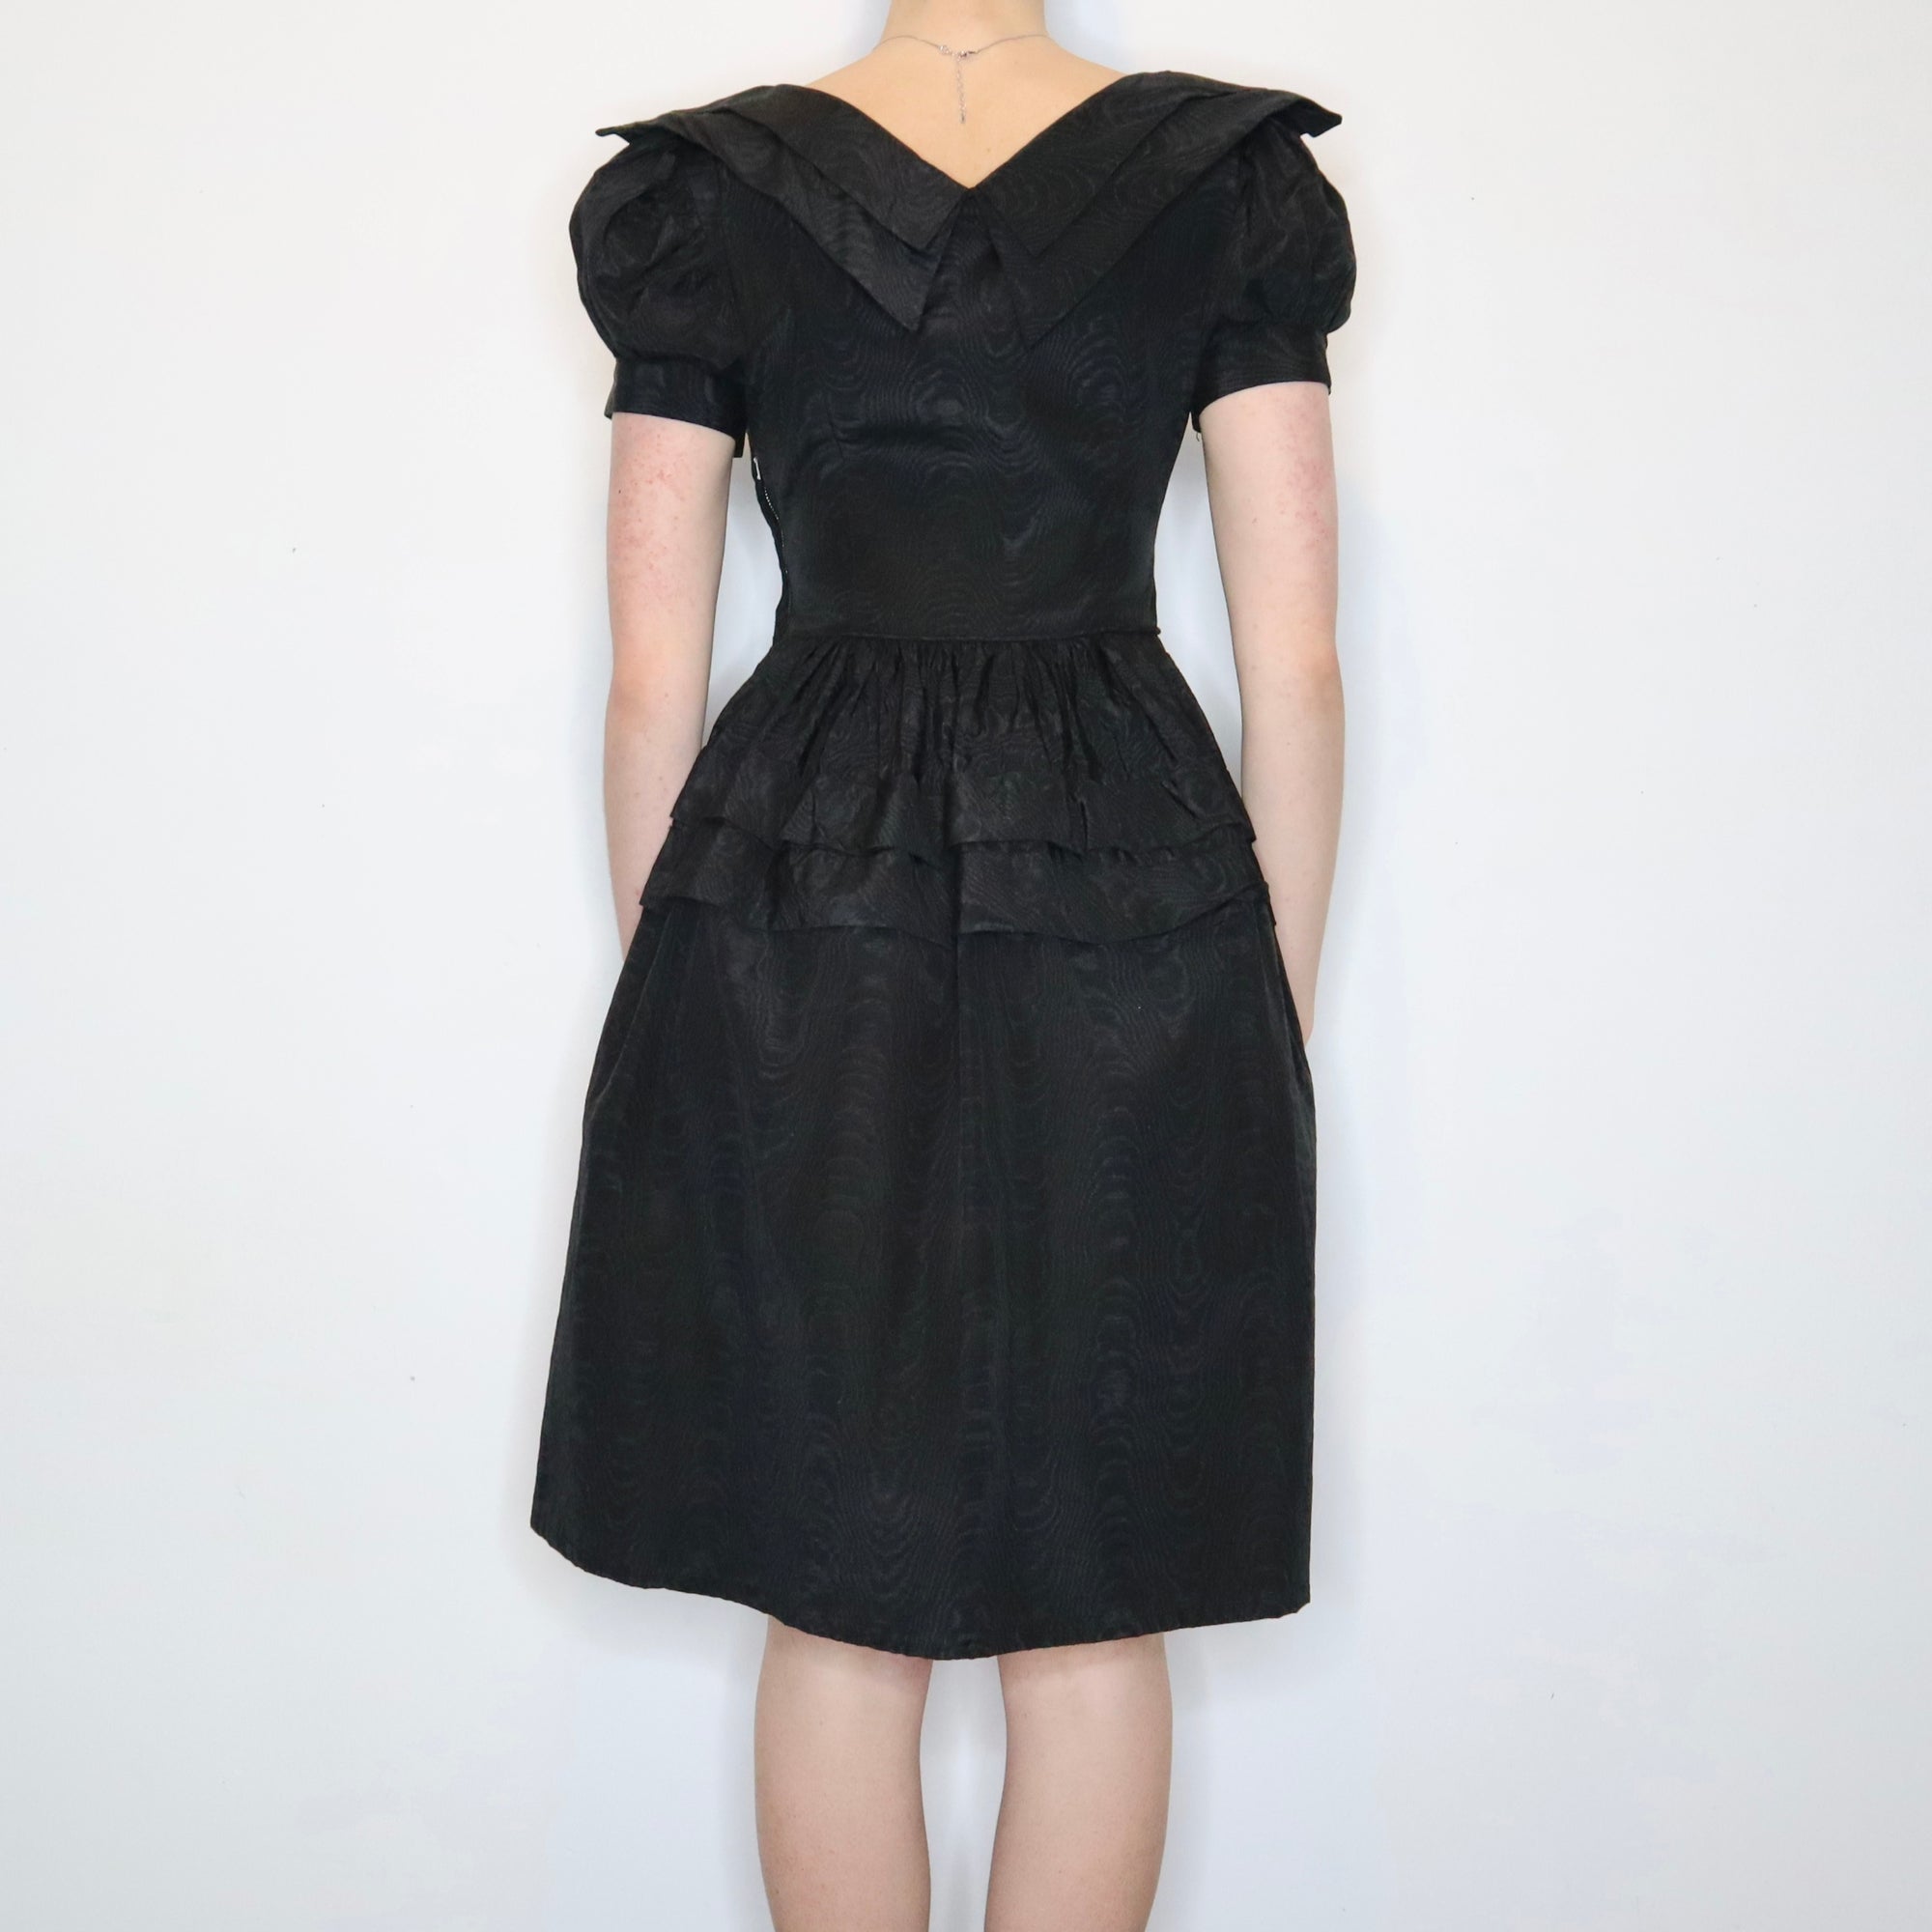 Black Cocktail Dress (Medium)